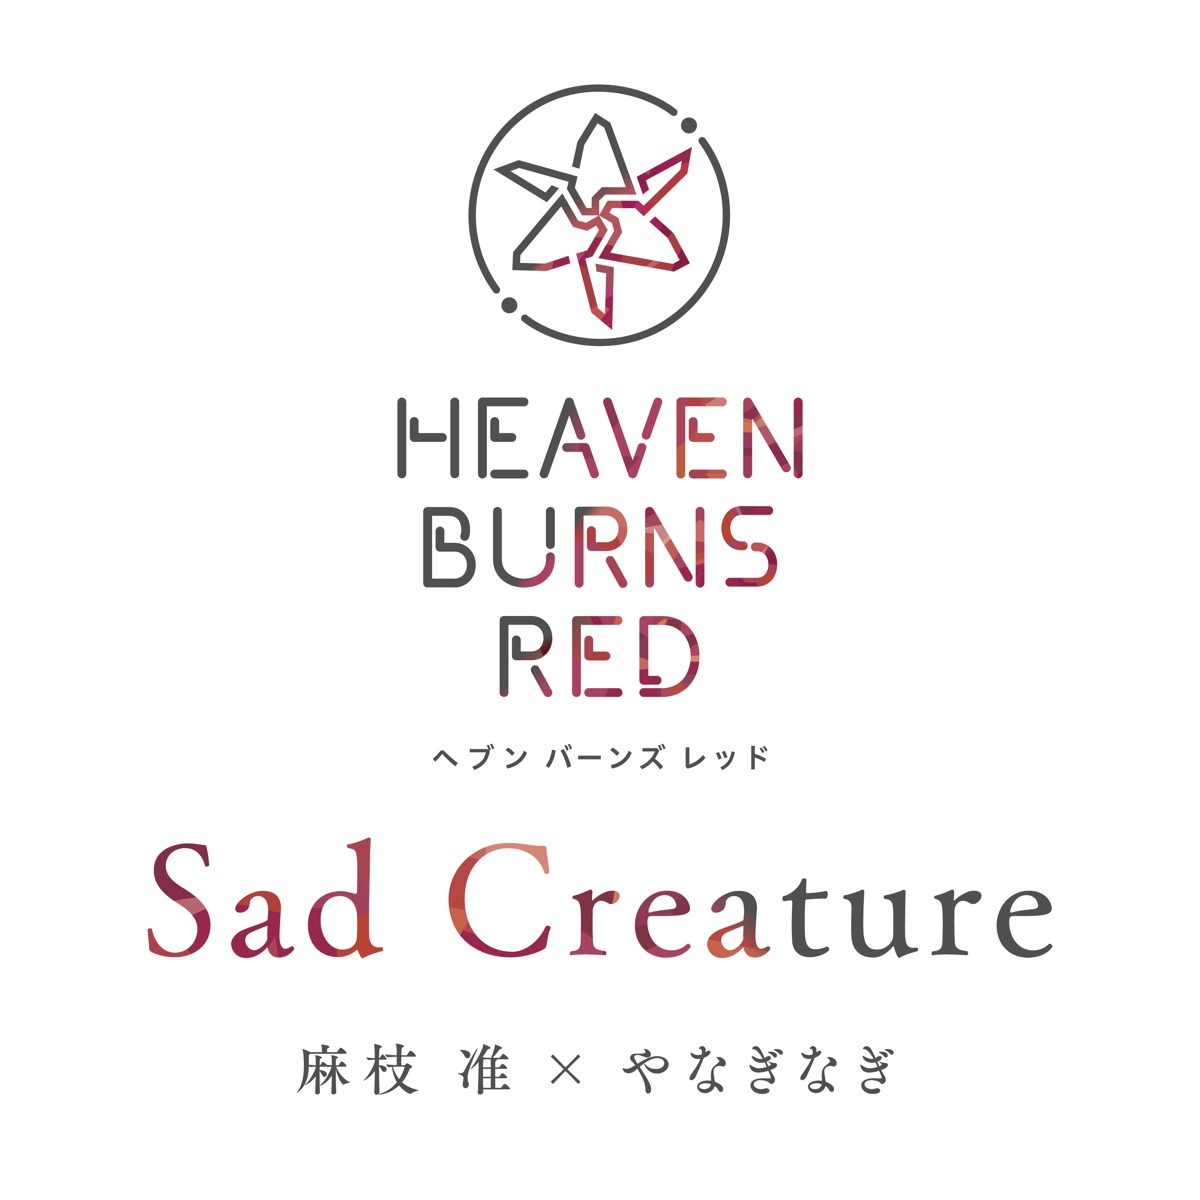 Cover art for『Jun Maeda x yanaginagi - Sad Creature』from the release『Sad Creature